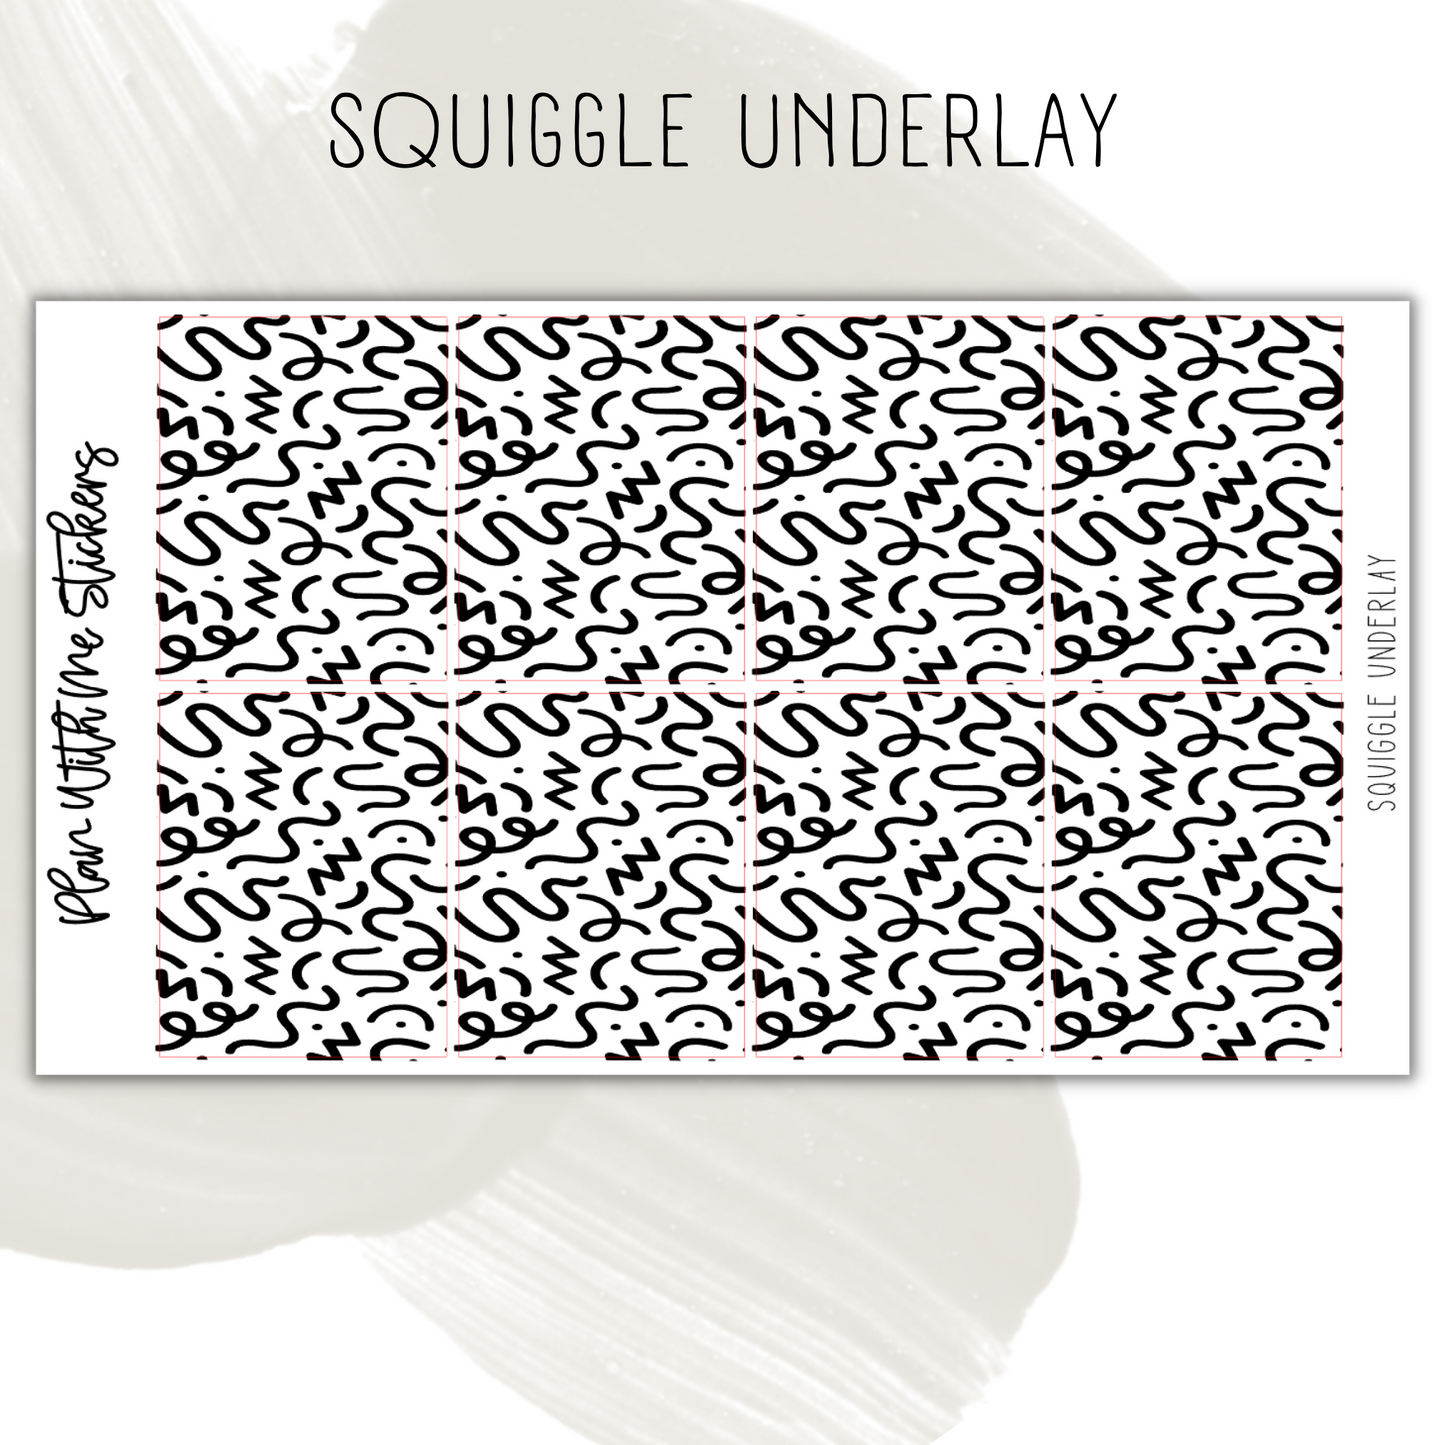 Squiggle Underlay